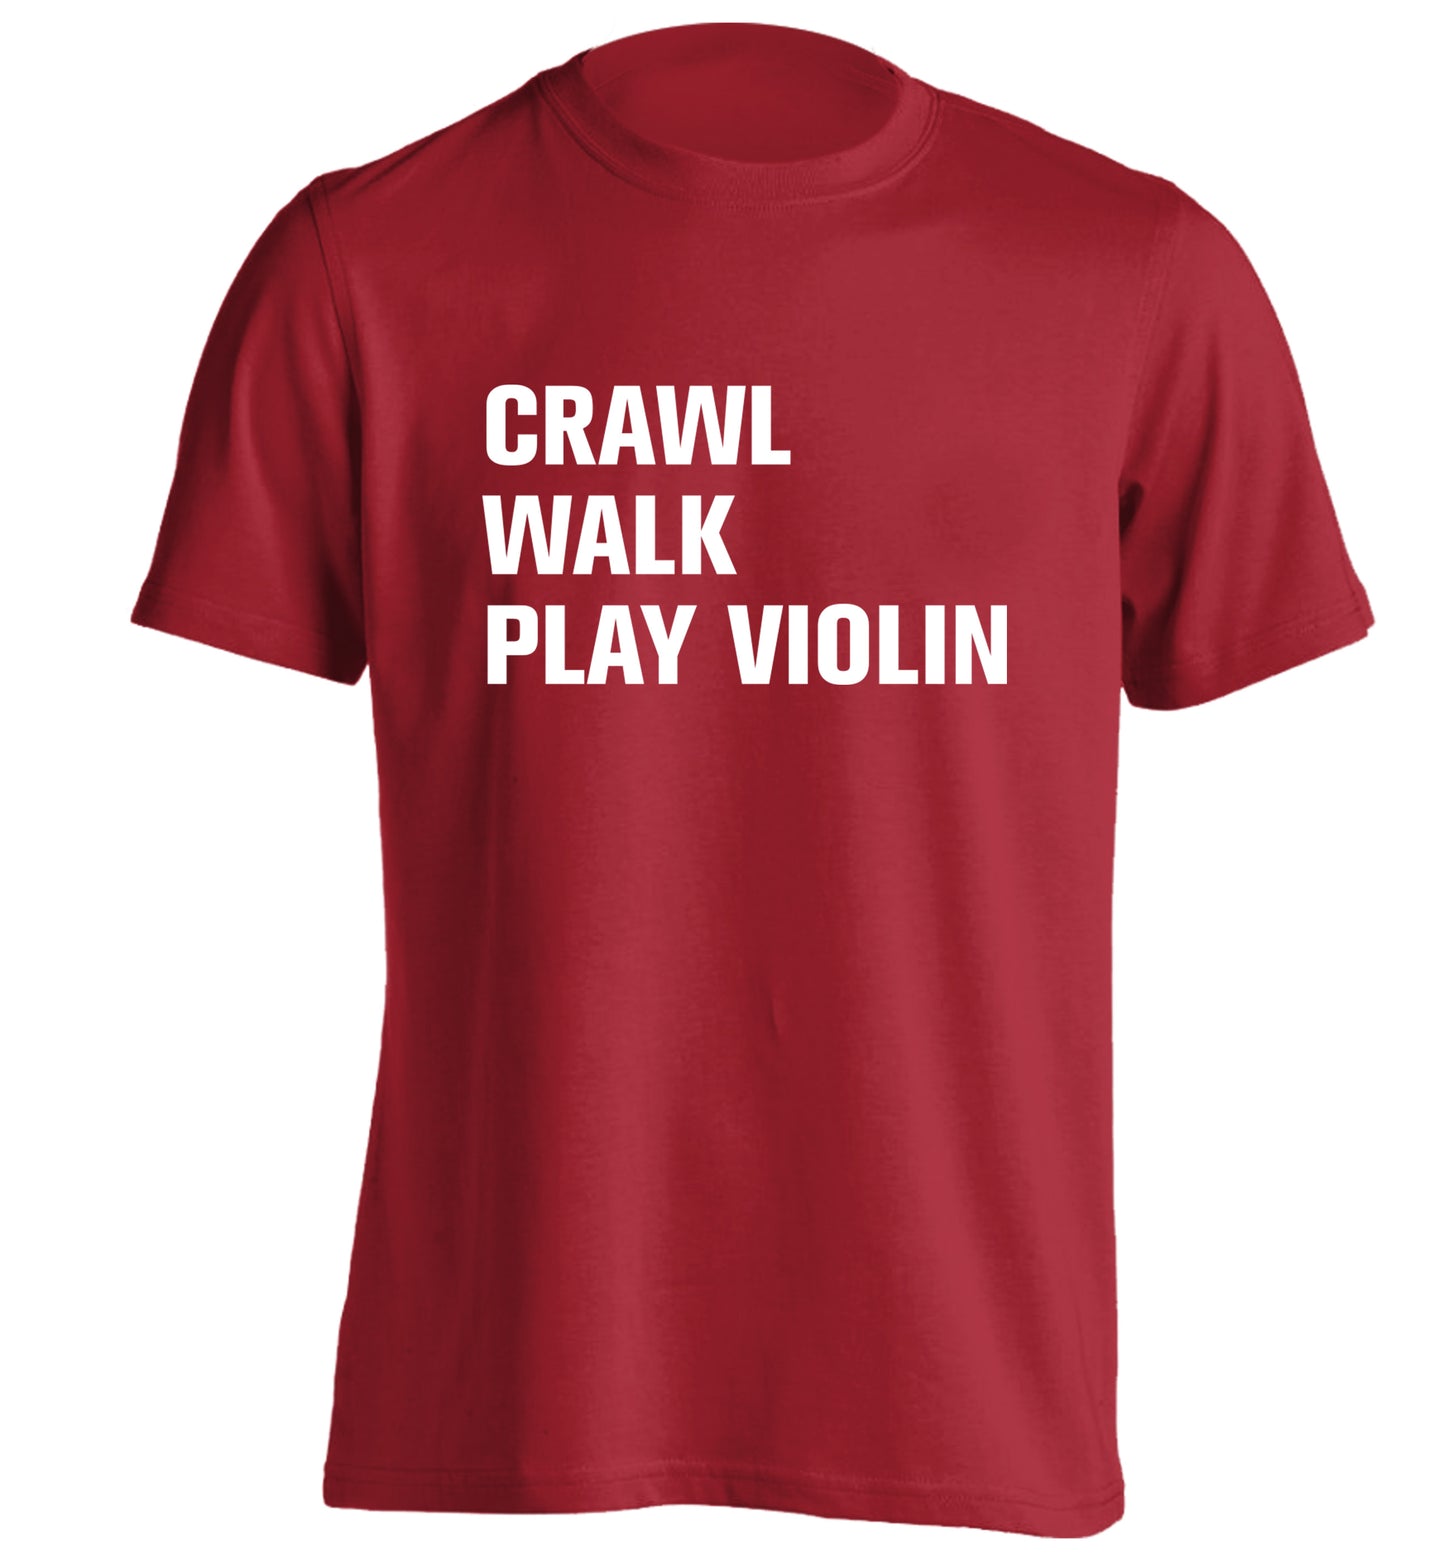 Crawl Walk Play Violin adults unisex red Tshirt 2XL